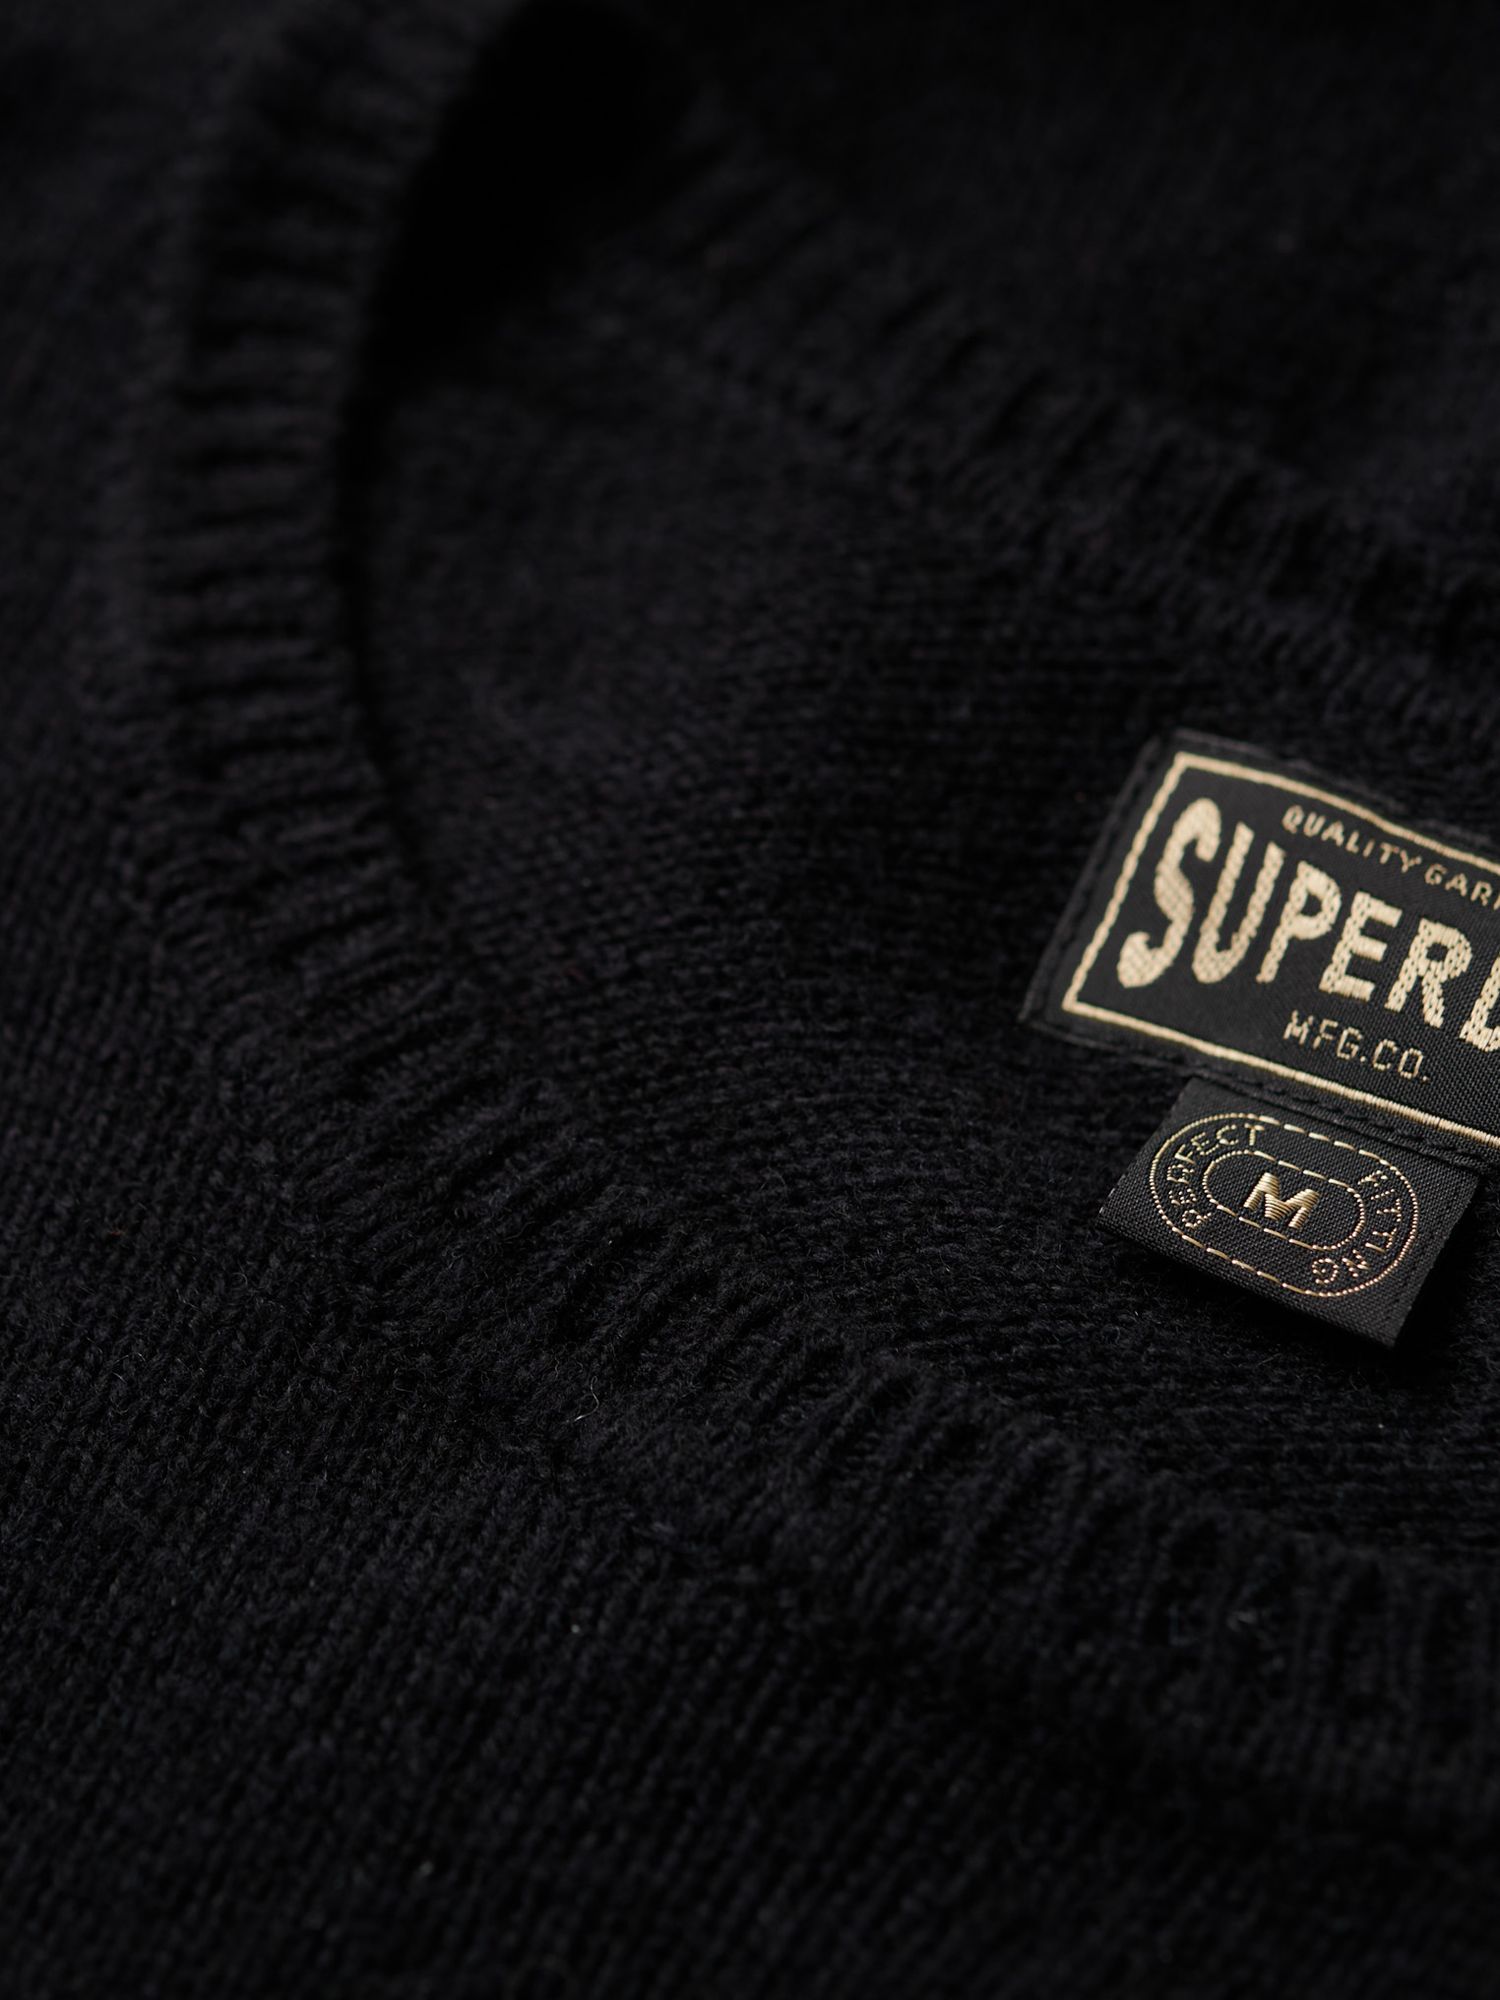 Superdry Wool Blend Essential Crew Neck Jumper, Black, S